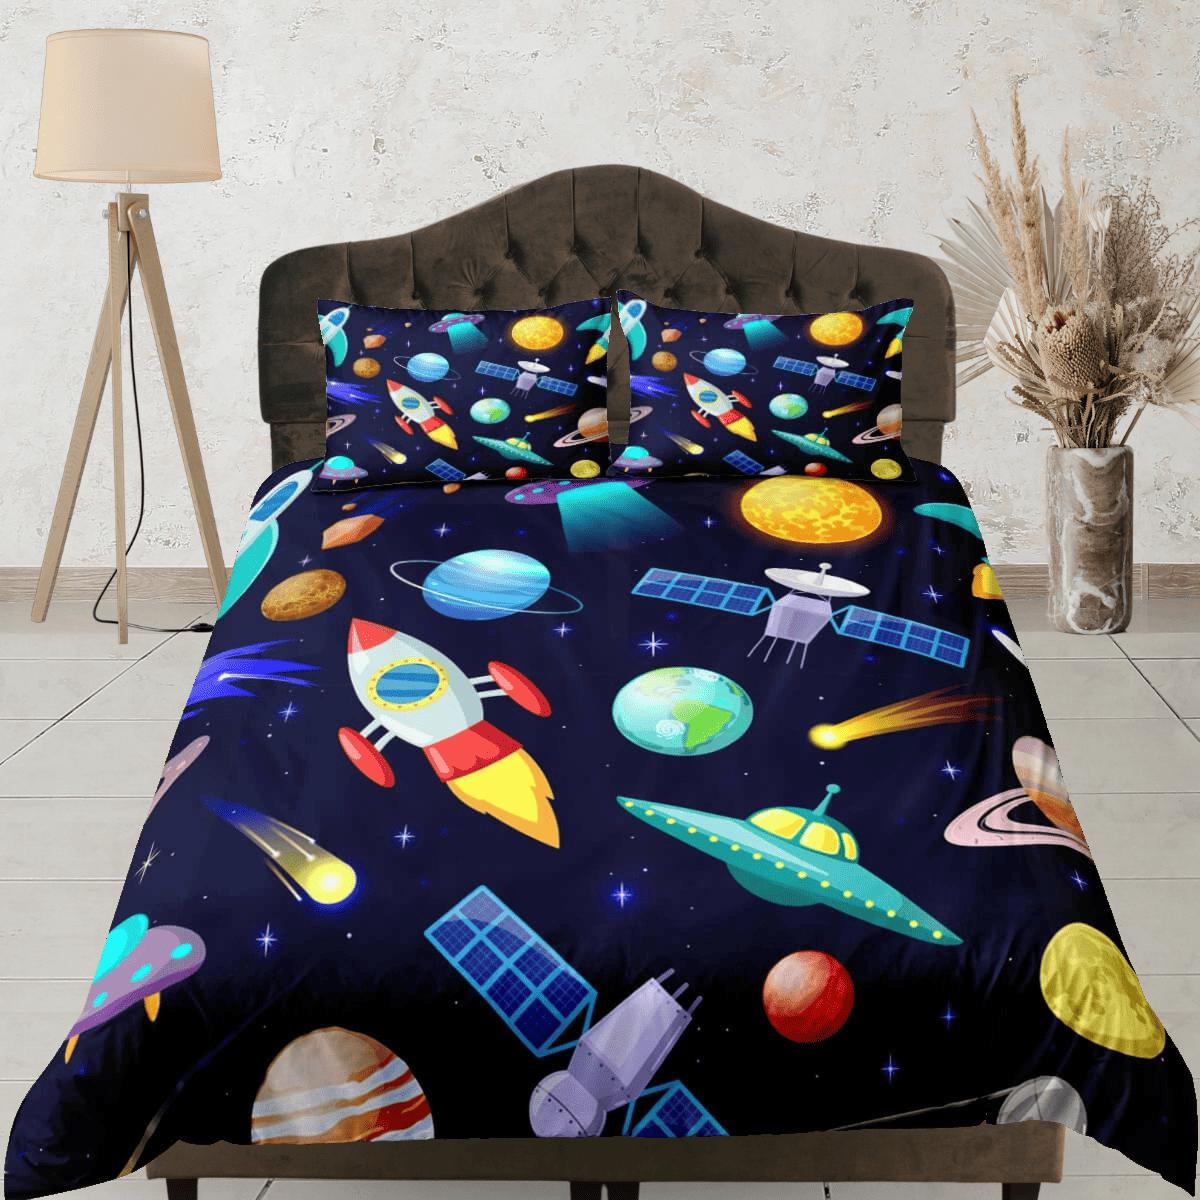 daintyduvet Satellite and spaceship duvet cover set for kids, galaxy bedding set full, king, queen, astronomy dorm bedding, toddler bedding aesthetic